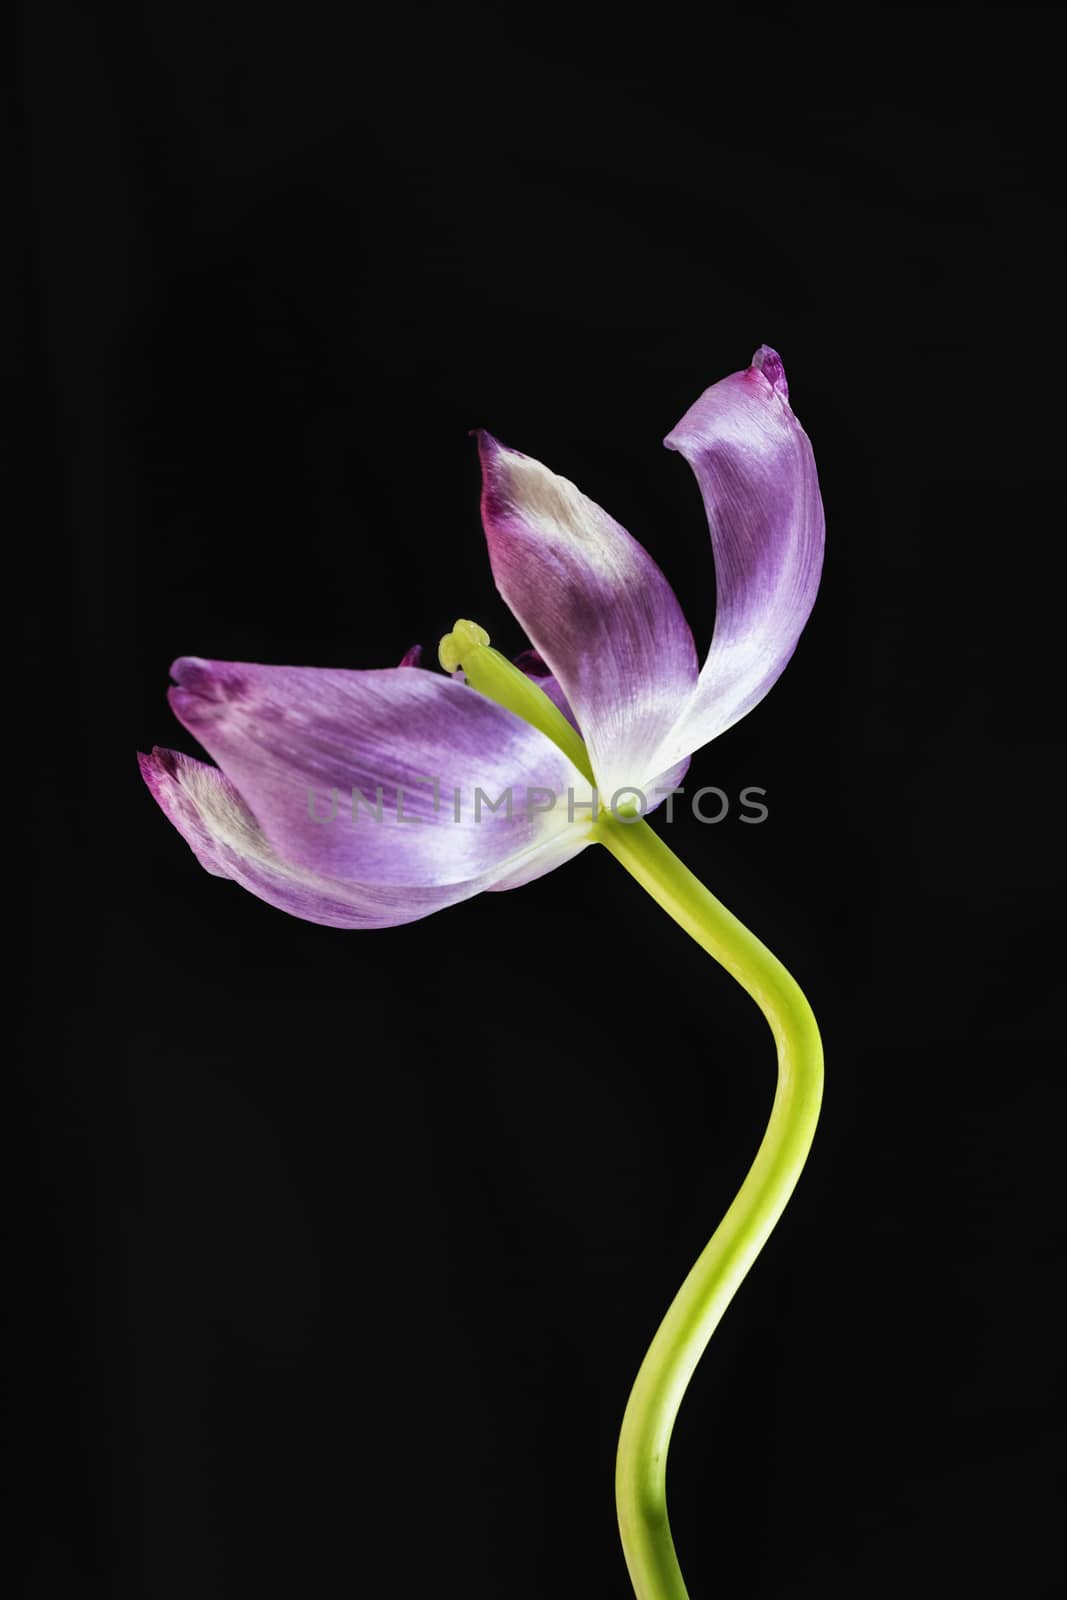 Tulip flower on black background by victimewalker